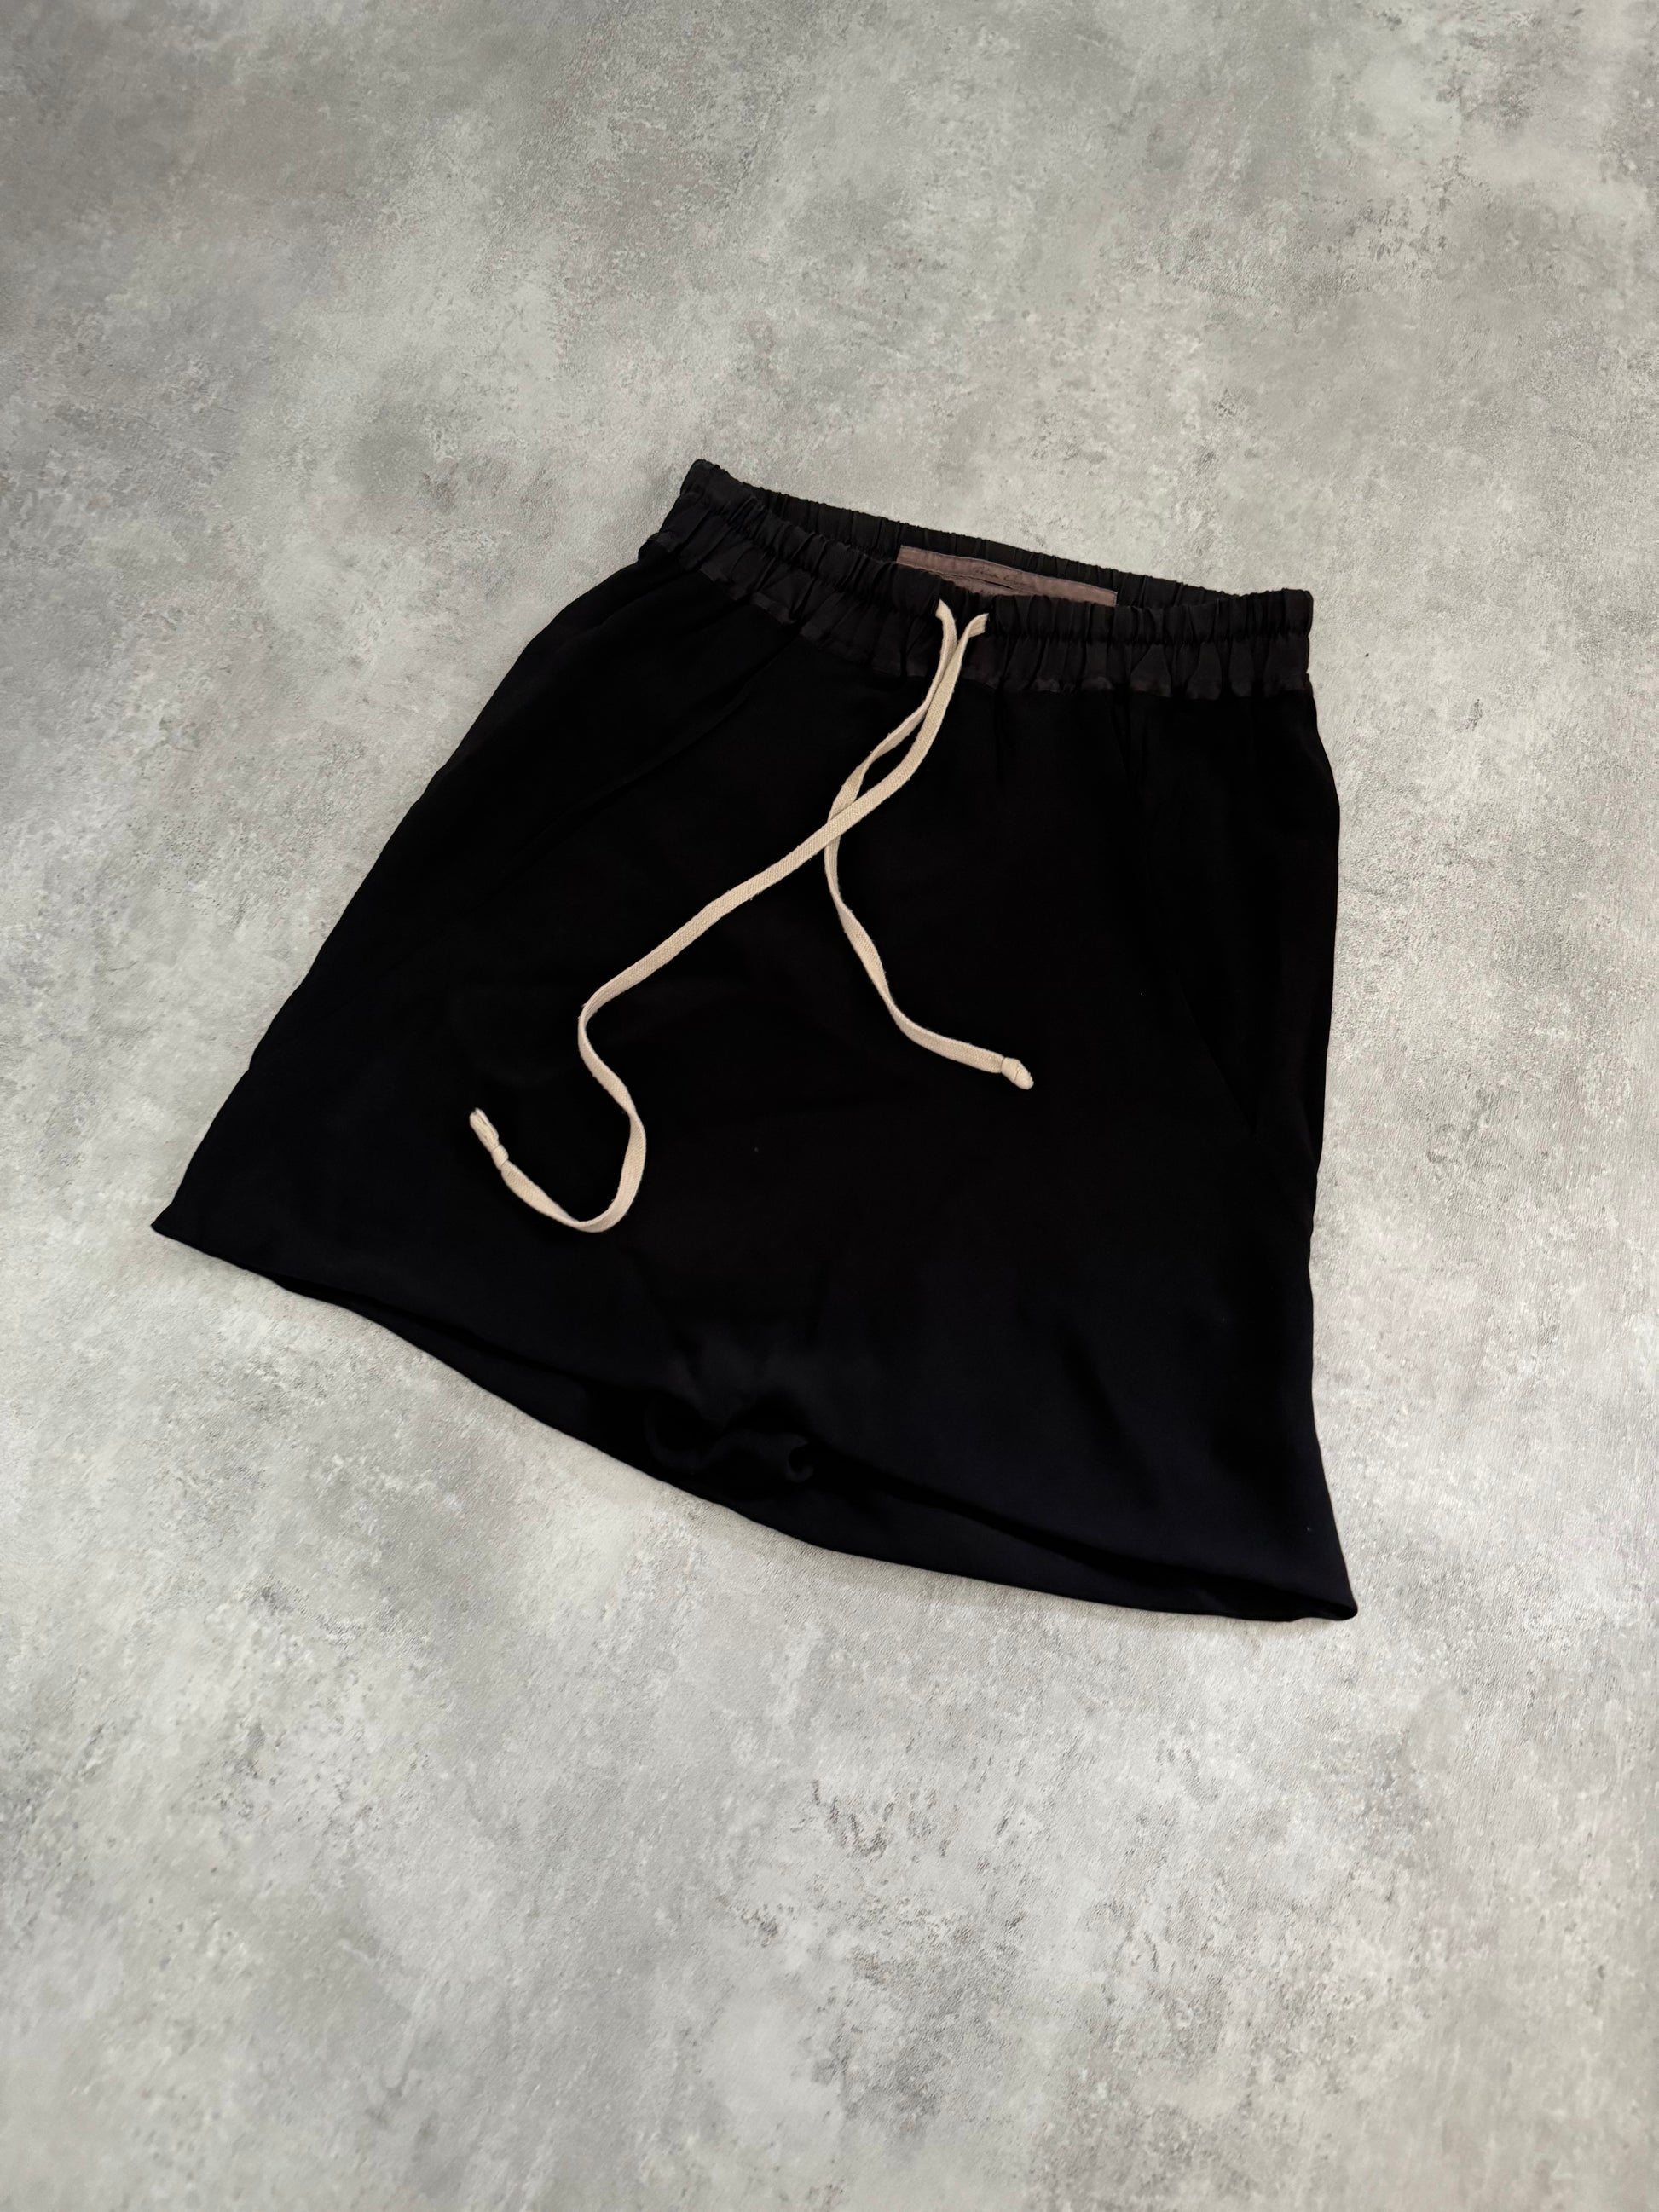 SS2013 Rick Owens Culture Dark Shorts (XS) - 5